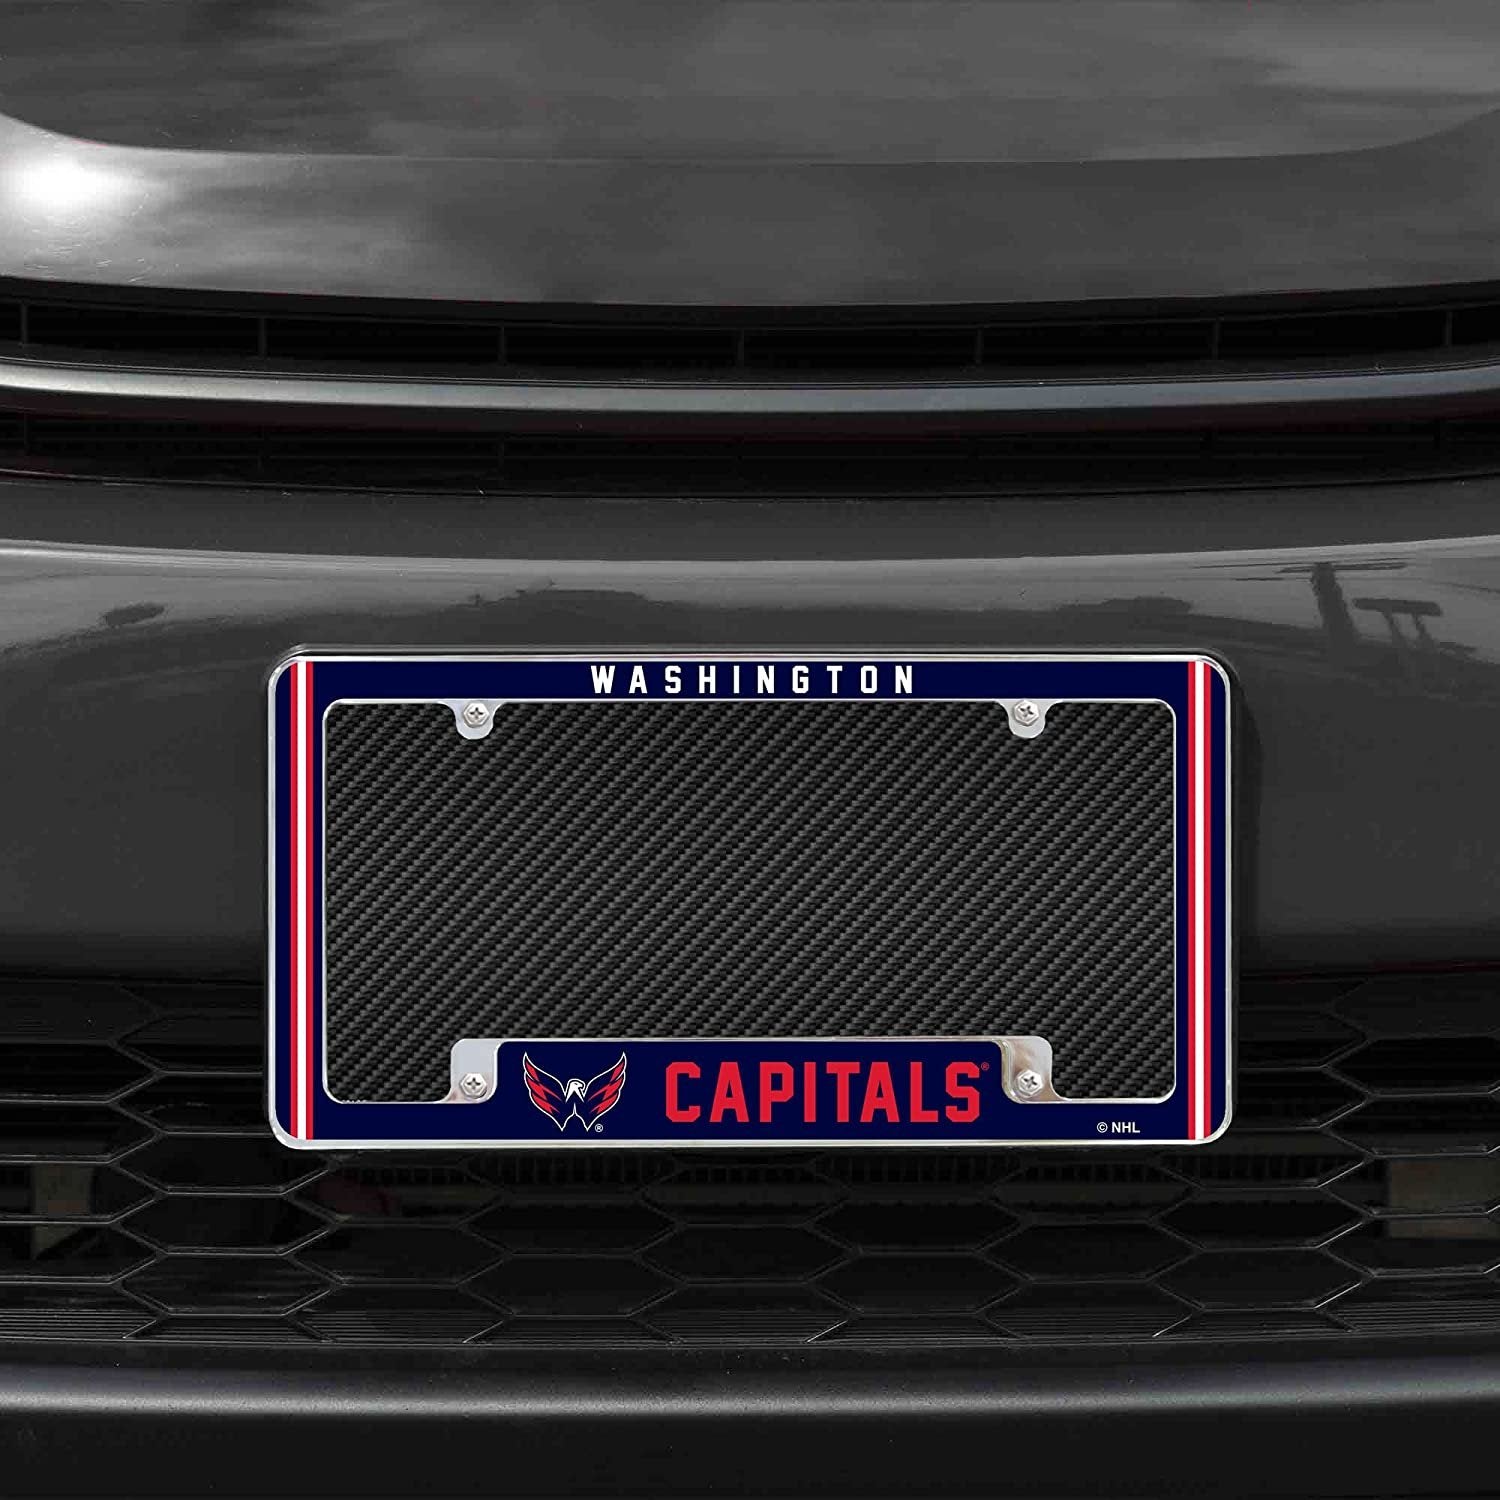 Washington Capitals Metal License Plate Frame Chrome Tag Cover Alternate Design 6x12 Inch